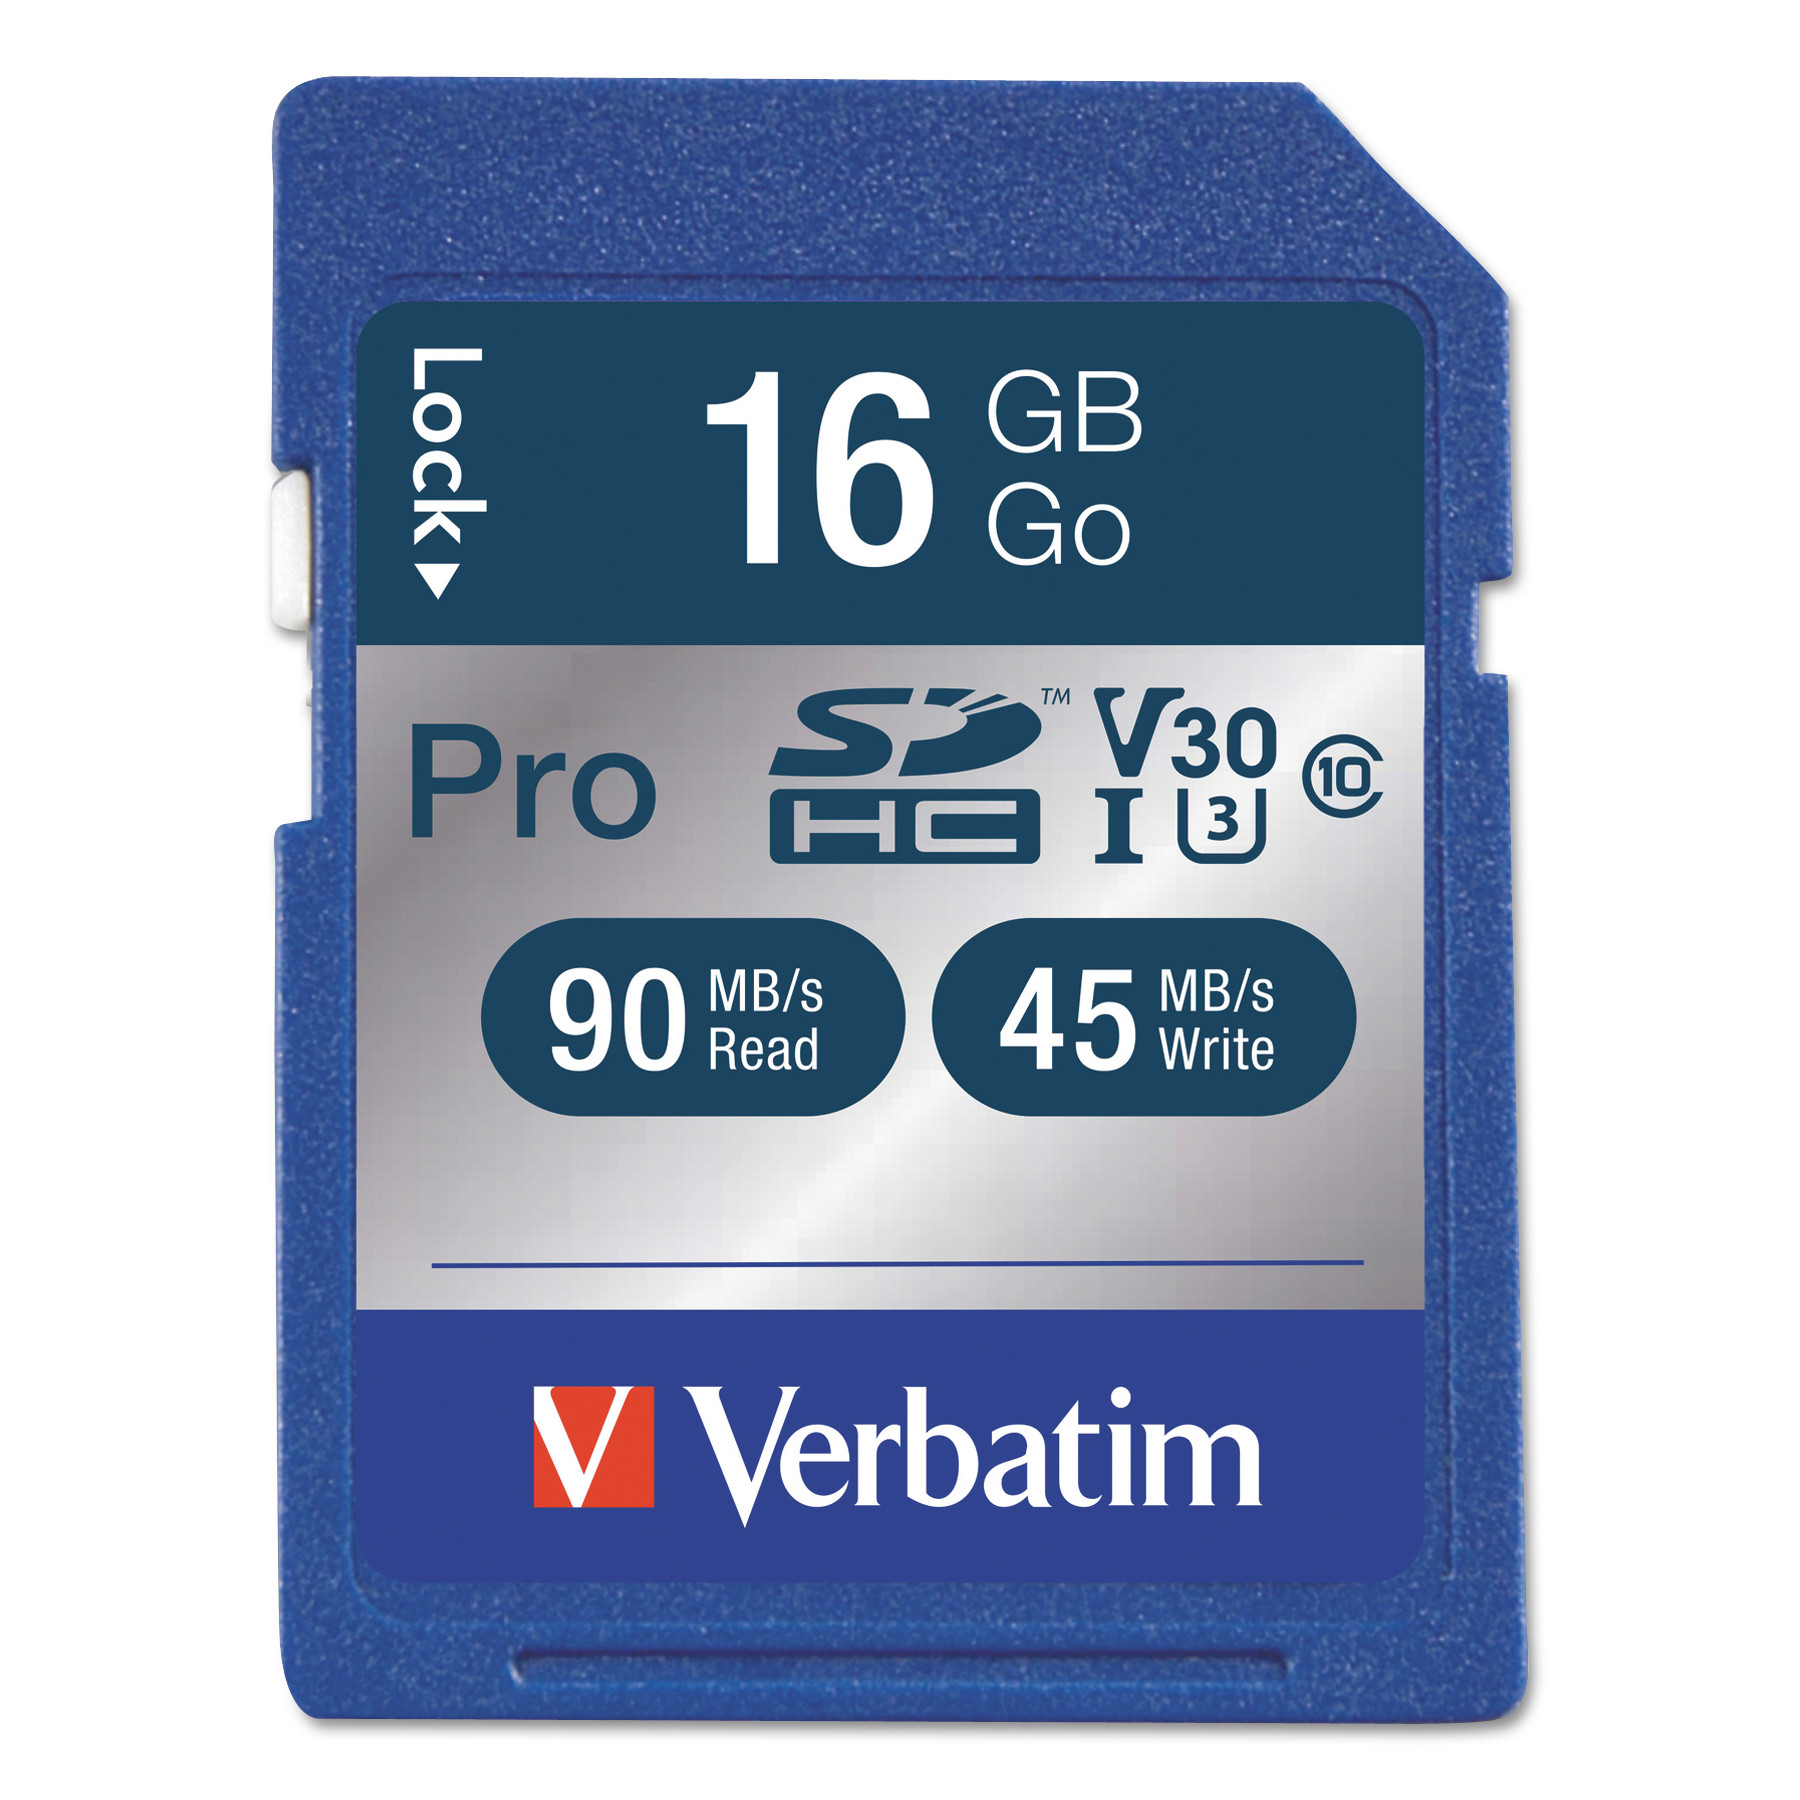  Verbatim 98046 16GB Pro 600X SDHC Memory Card, UHS-I V30 U3 Class 10 (VER98046) 